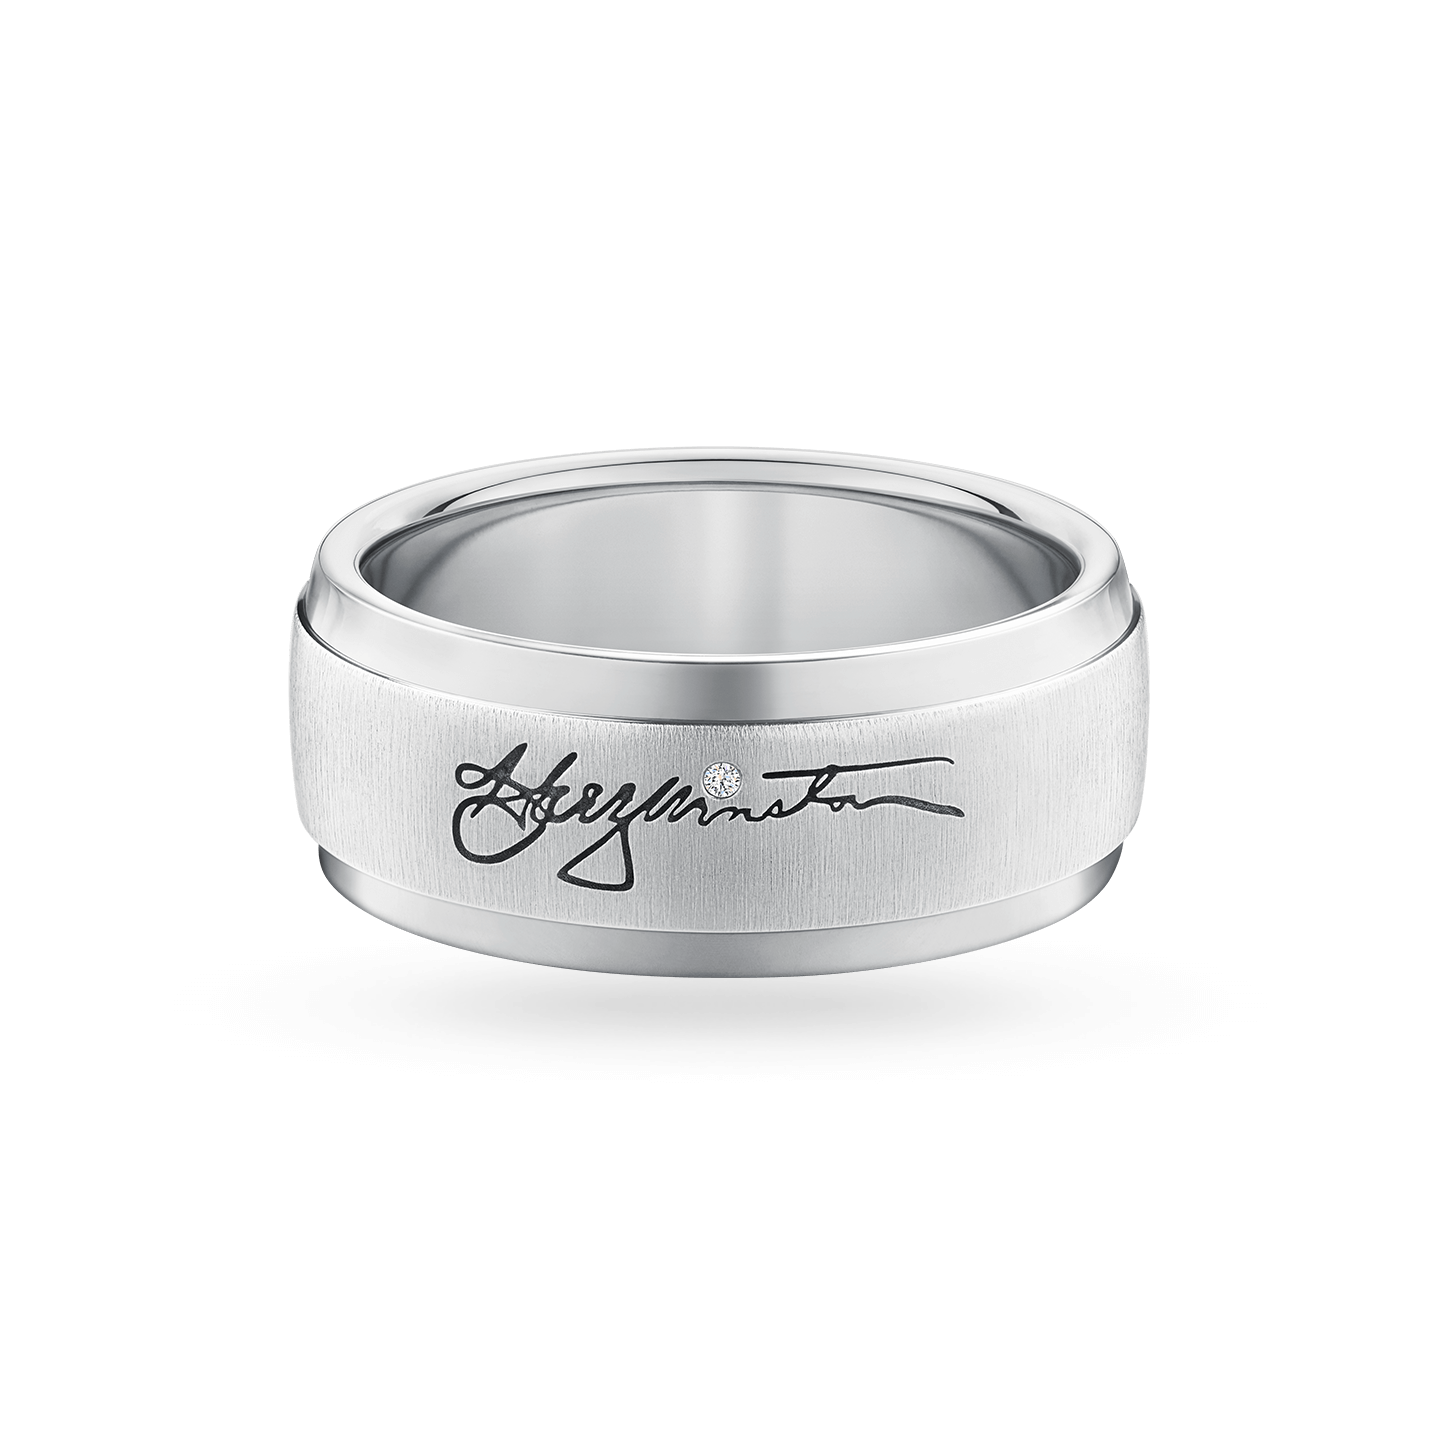 Signature Band Ring, Product Image 1